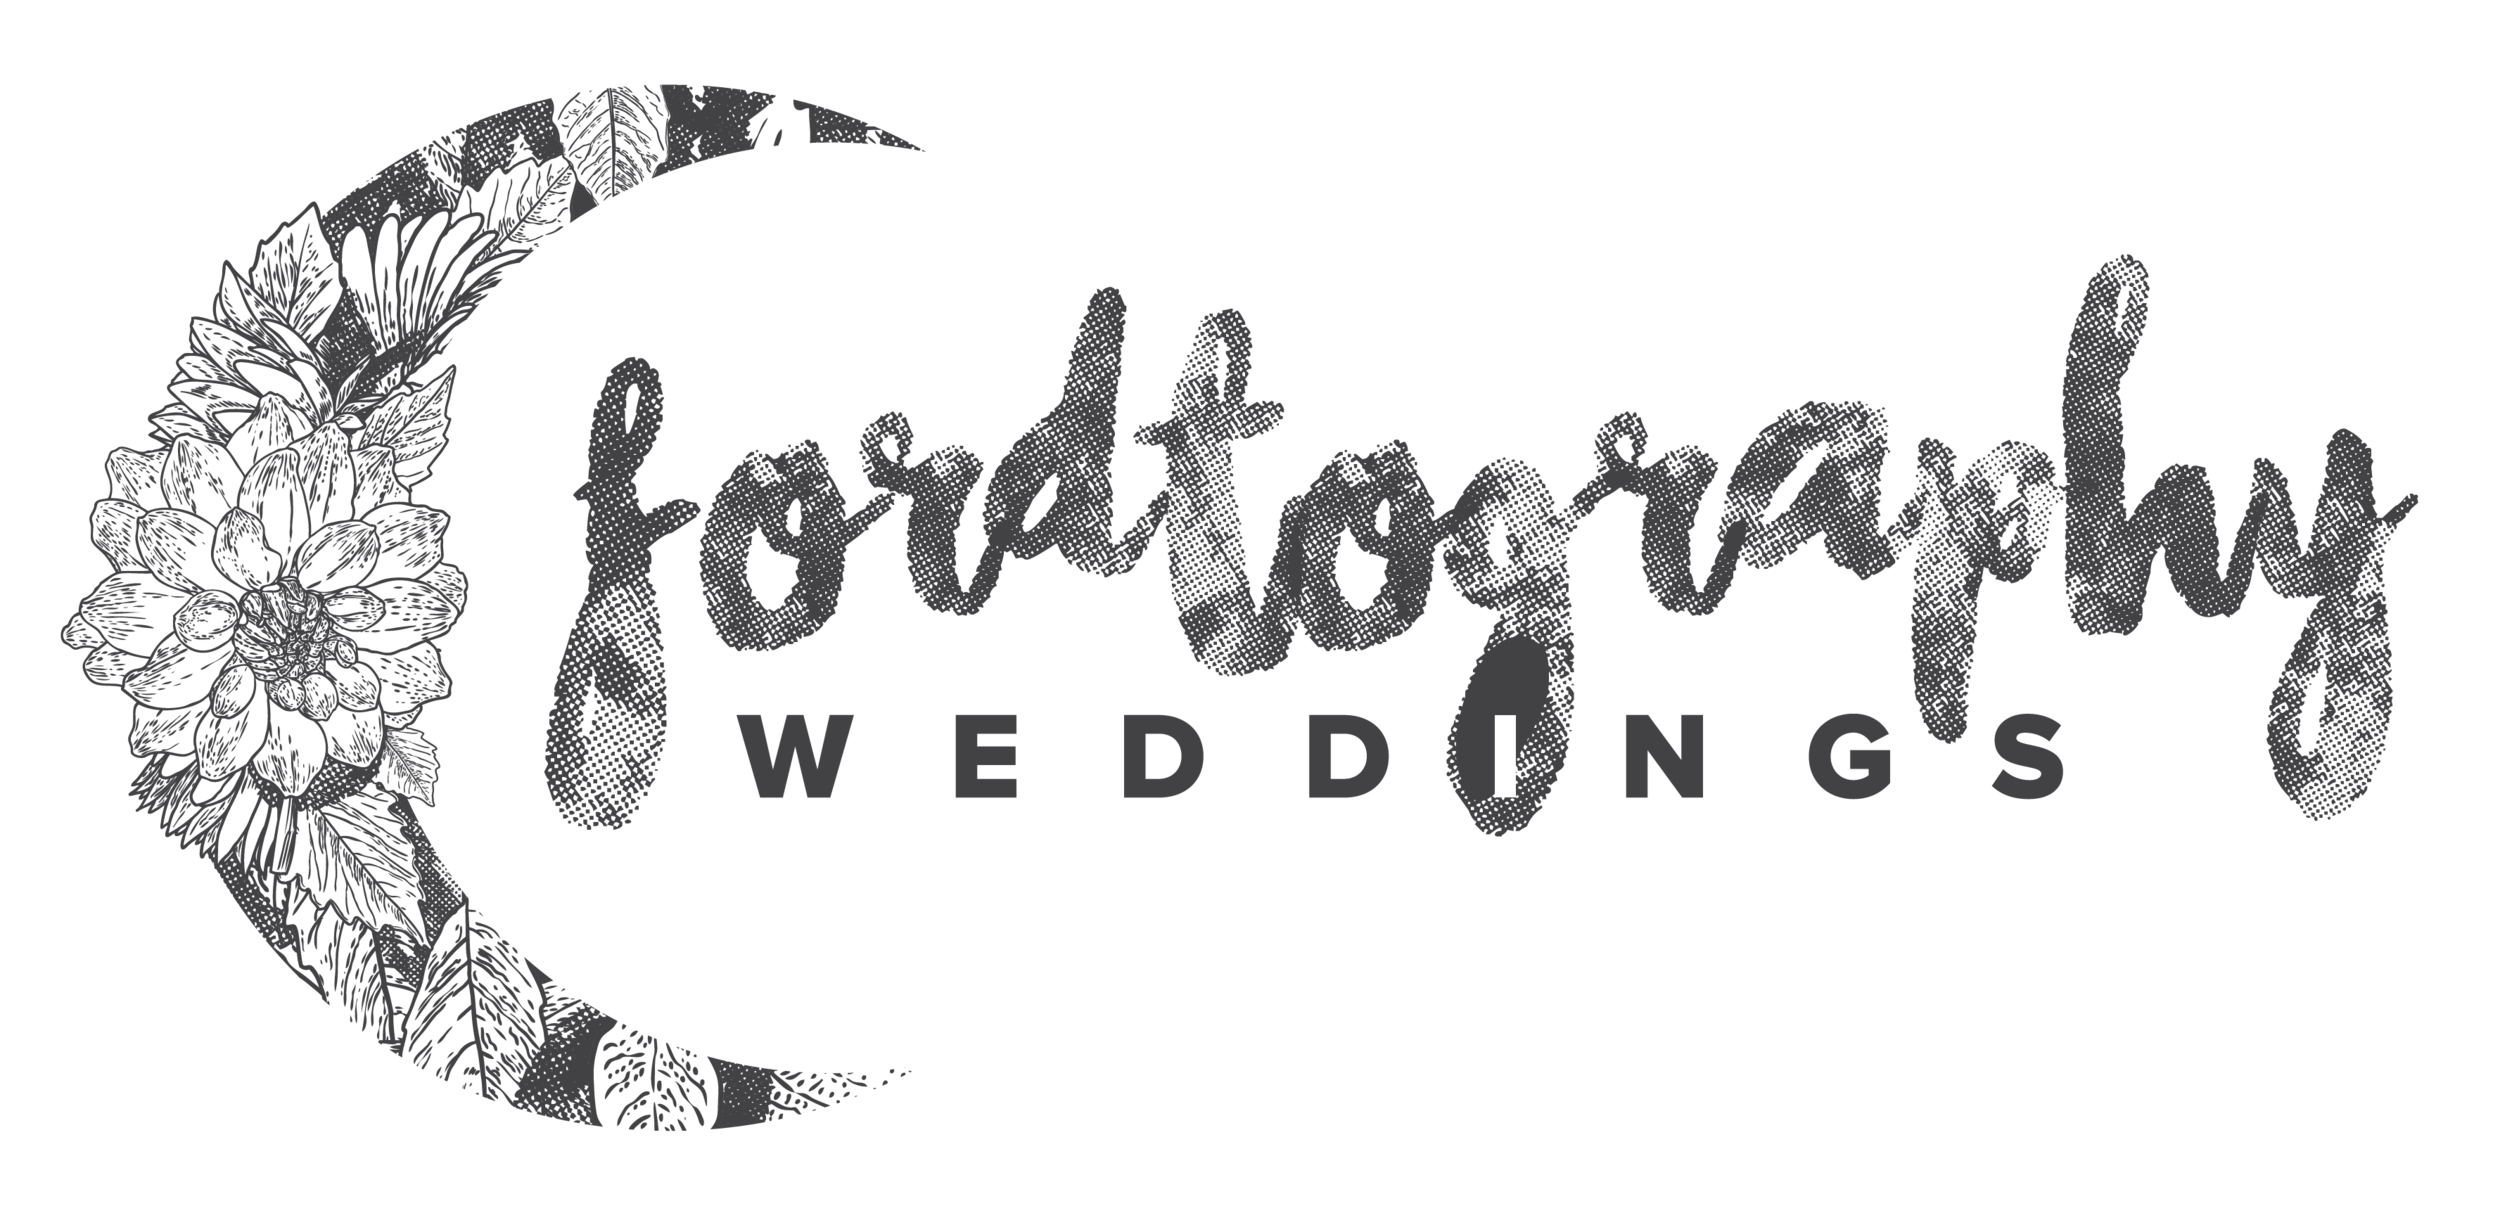 Fordtography Weddings